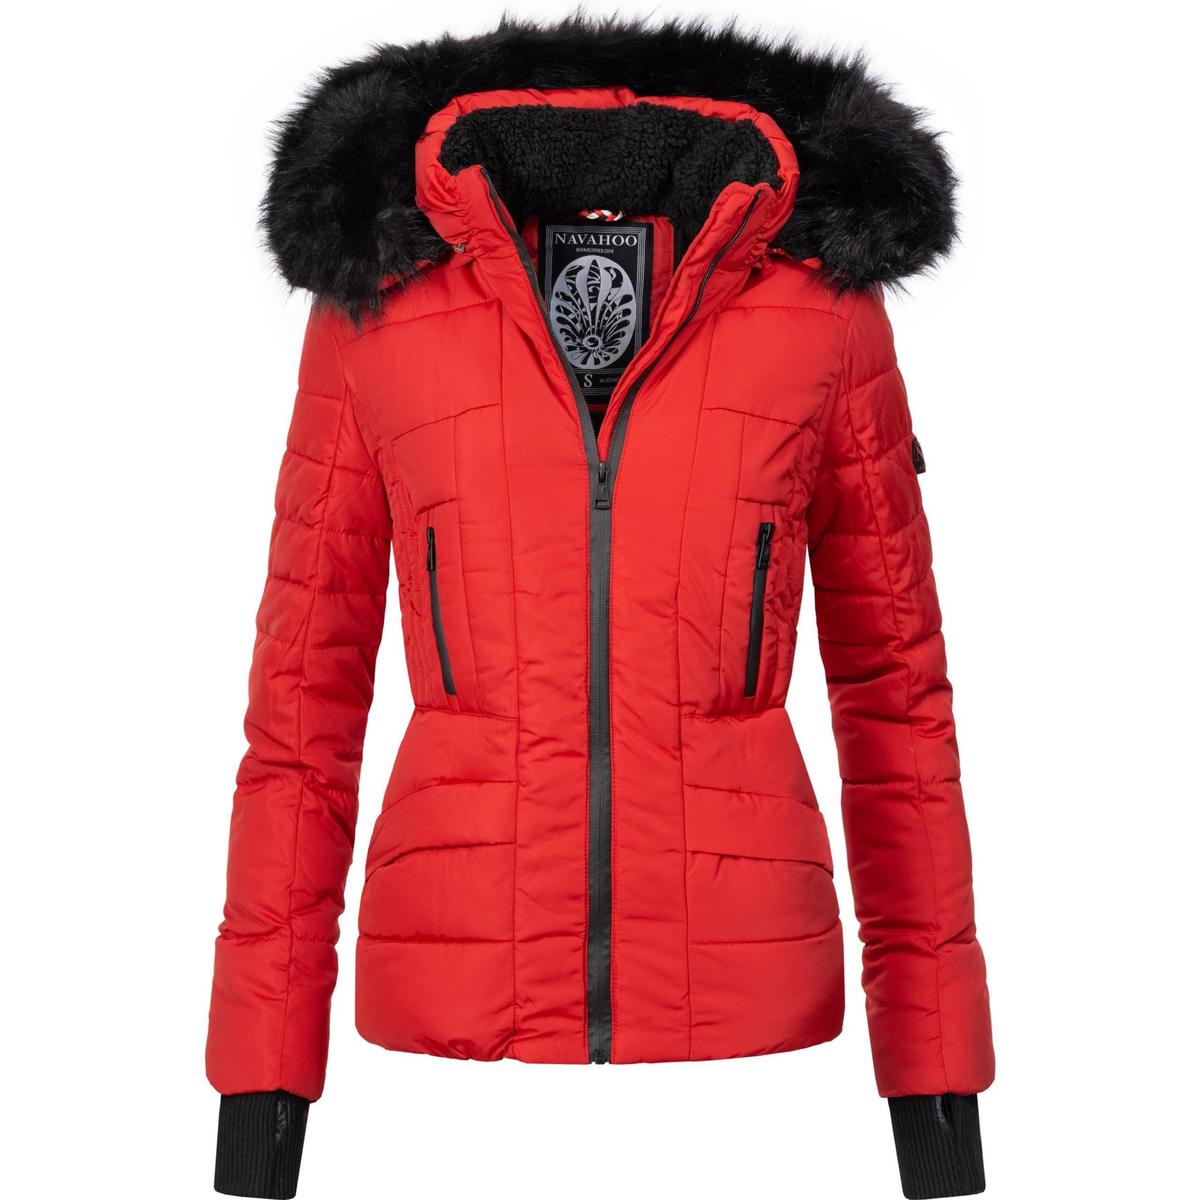 Damen 119,95 € - Navahoo Winterjacke Rot Adele Jacken Kleidung